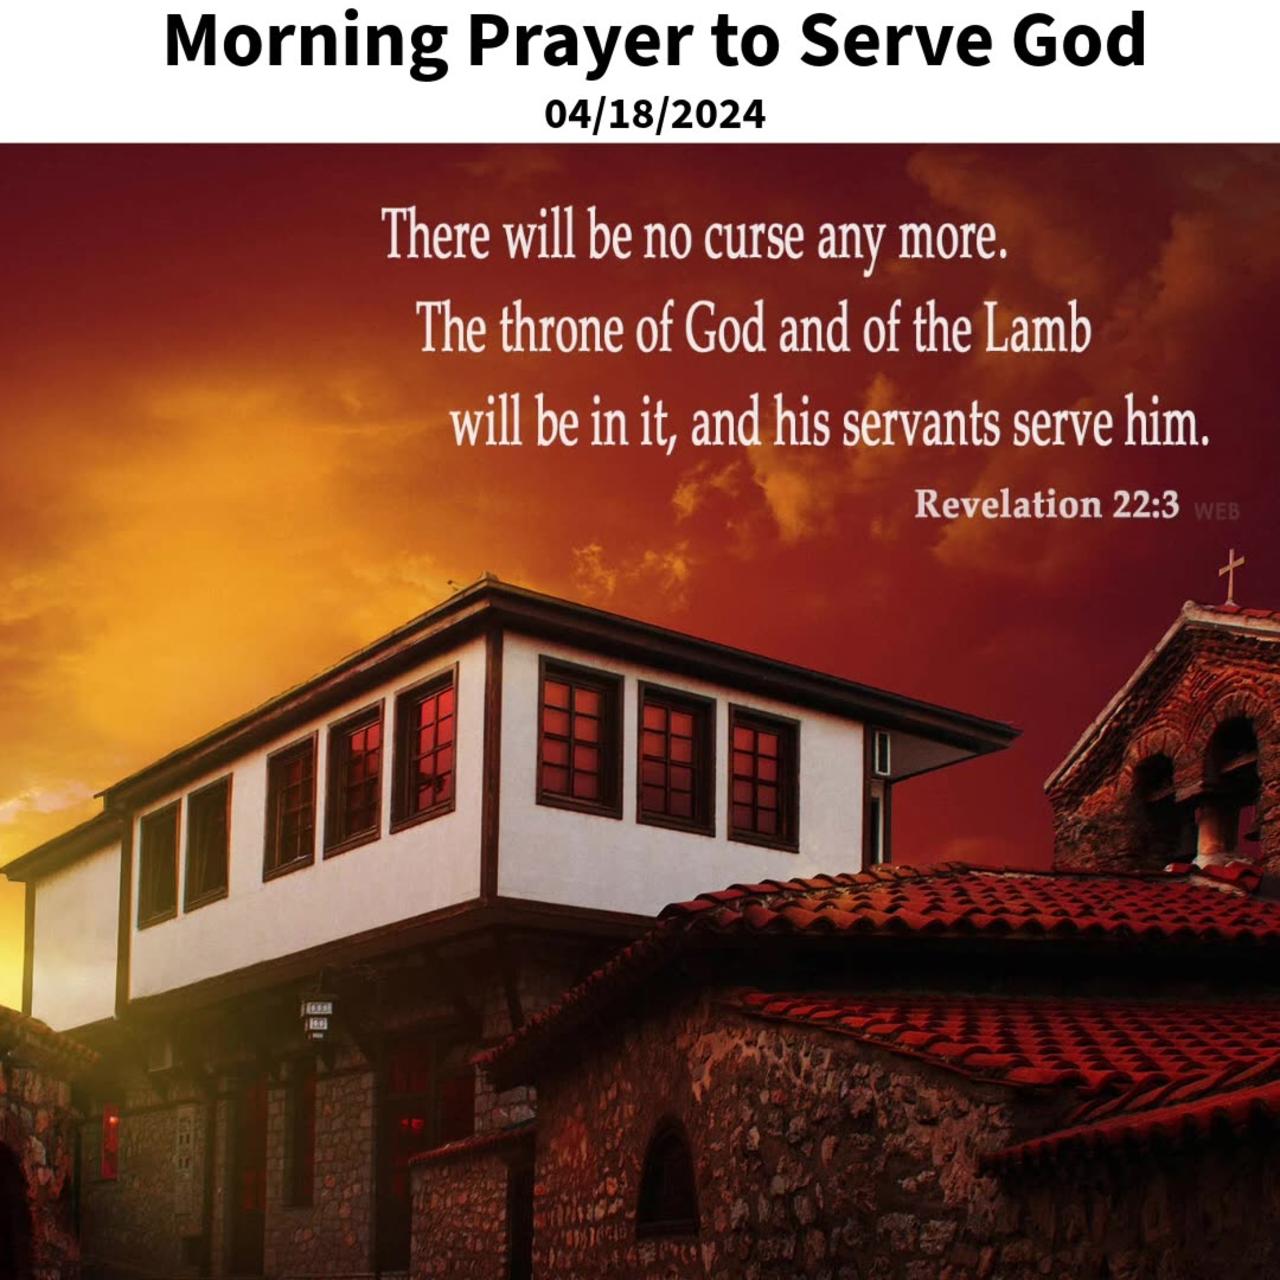 Morning Prayer to Serve God #youtubeshorts #jesus #grace #mercy #faith #bless #fyp #trust #joy #love